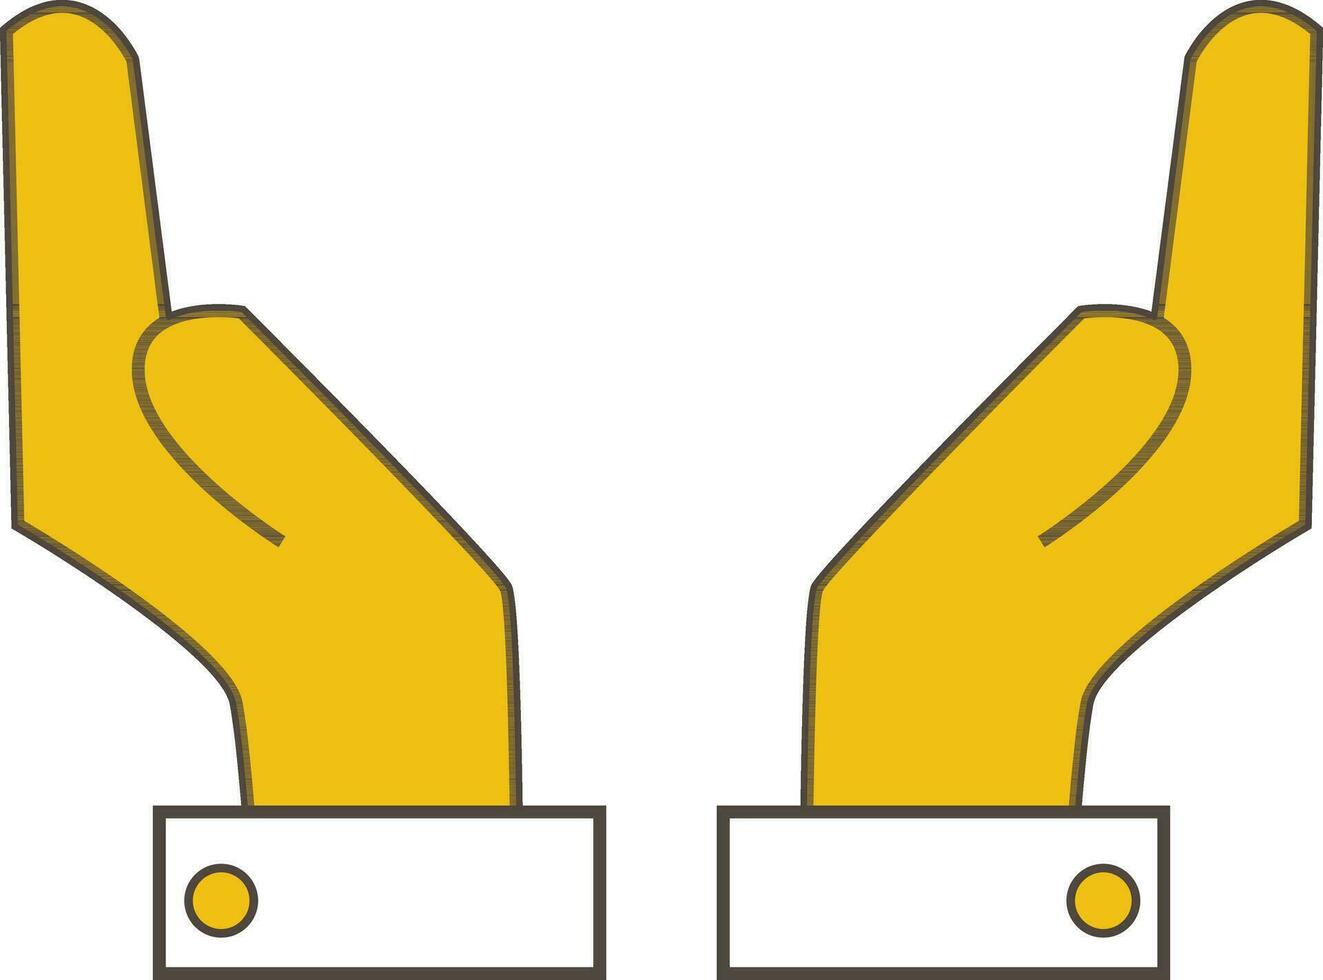 plano estilo símbolo de un secundario mano. vector